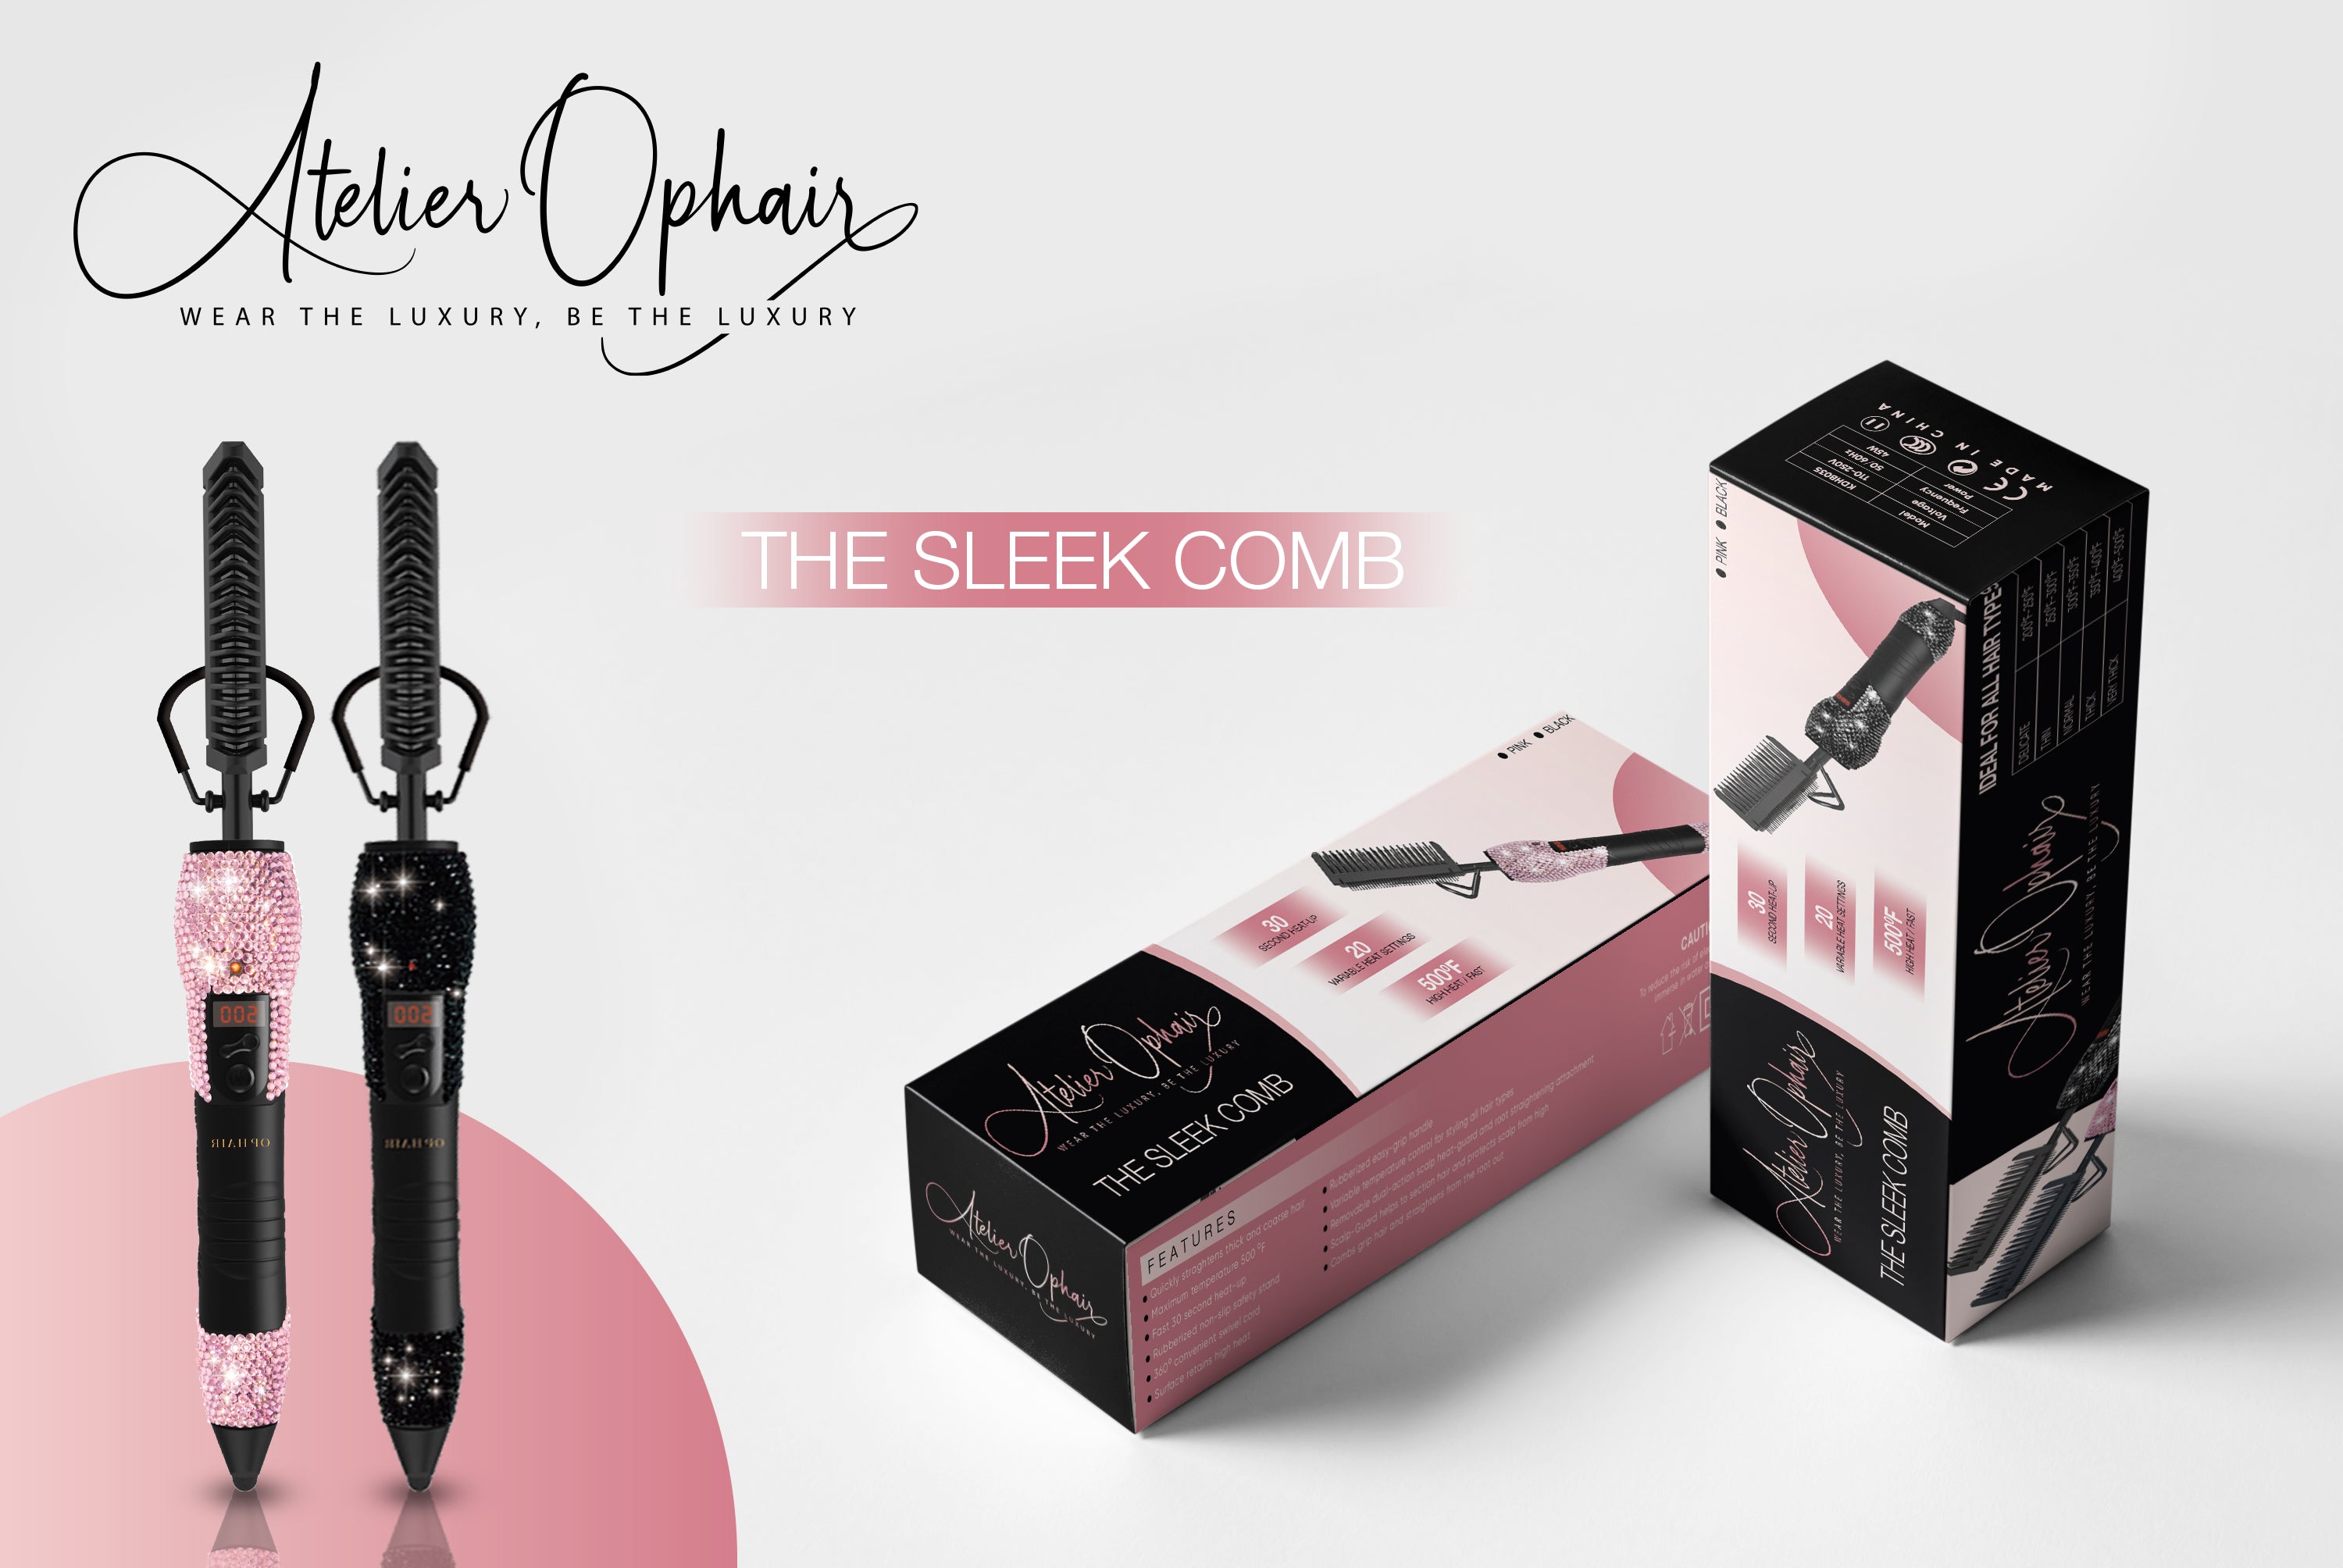 The Sleek Comb